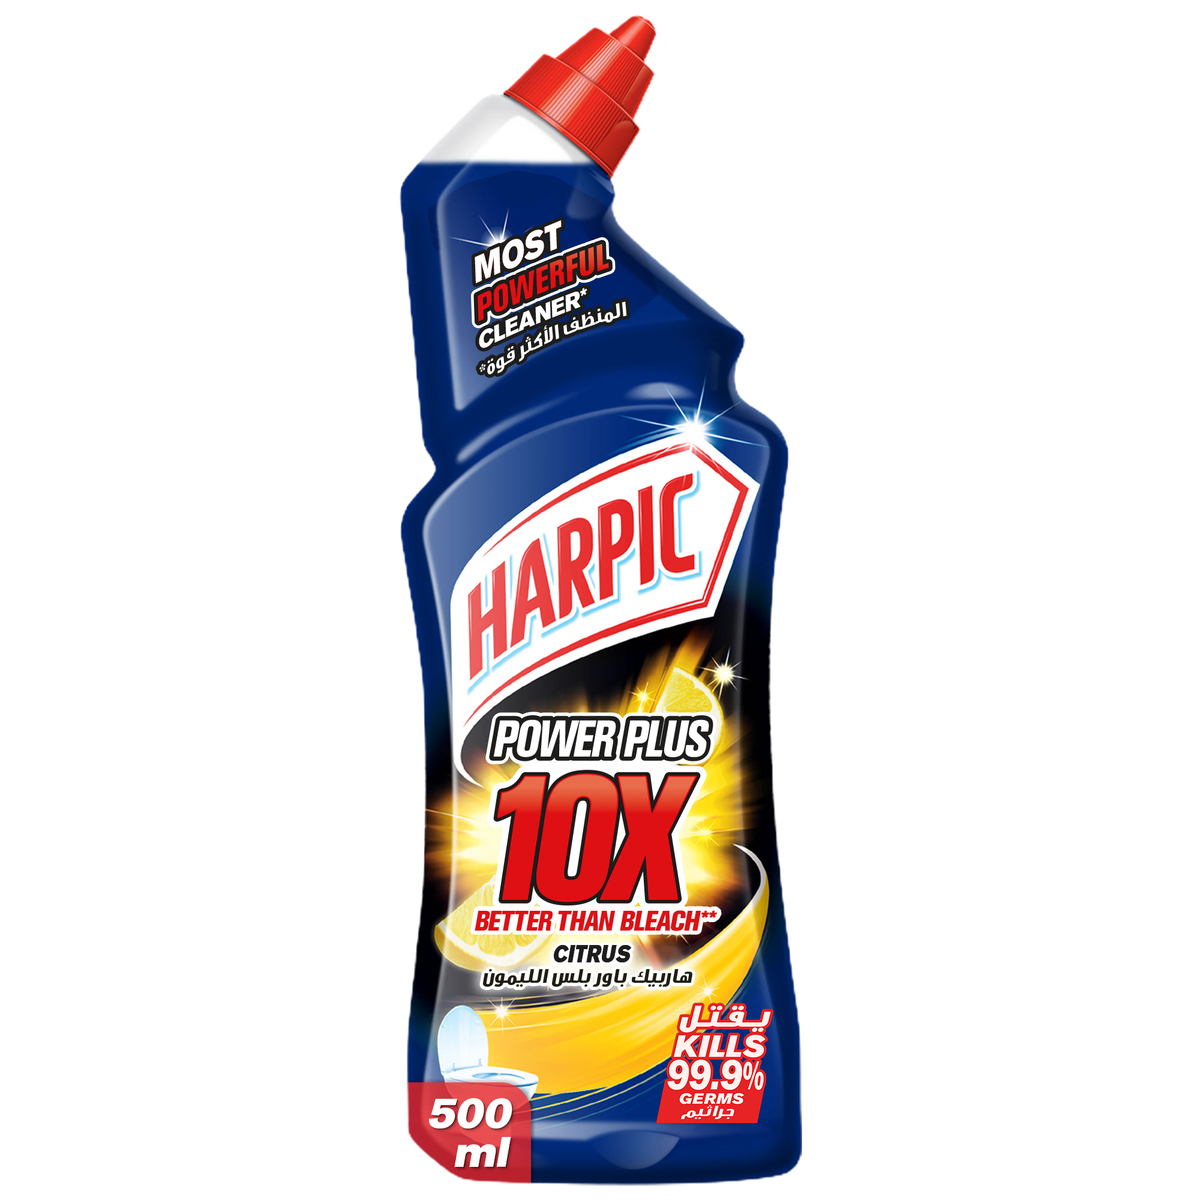 Harpic Power Plus Toilet Cleaner Citrus Fragrance 500 ml